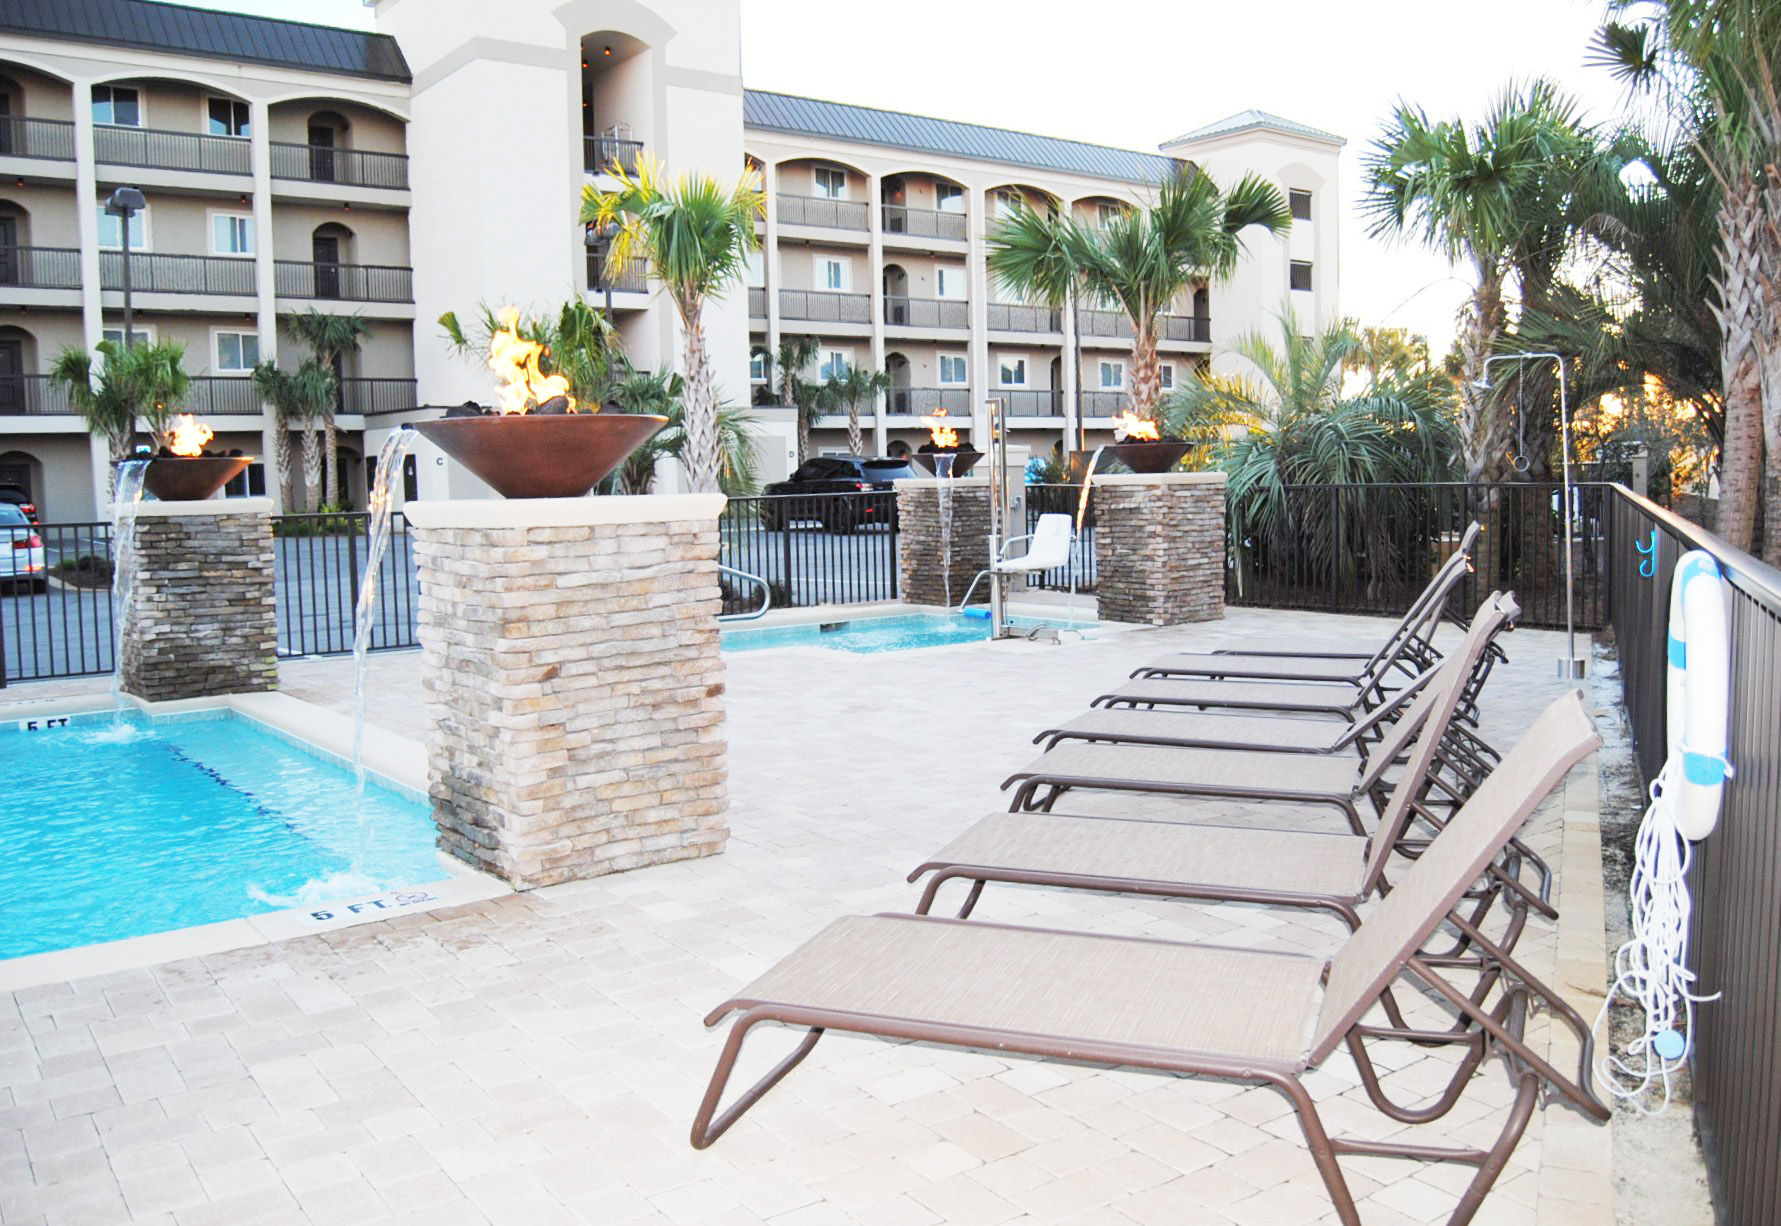 Alerio Resort Scenic Gulf Drive Miramar Beach Sandestin Destin Florida Vacation Beach Condos by Sunset Resort Rentals